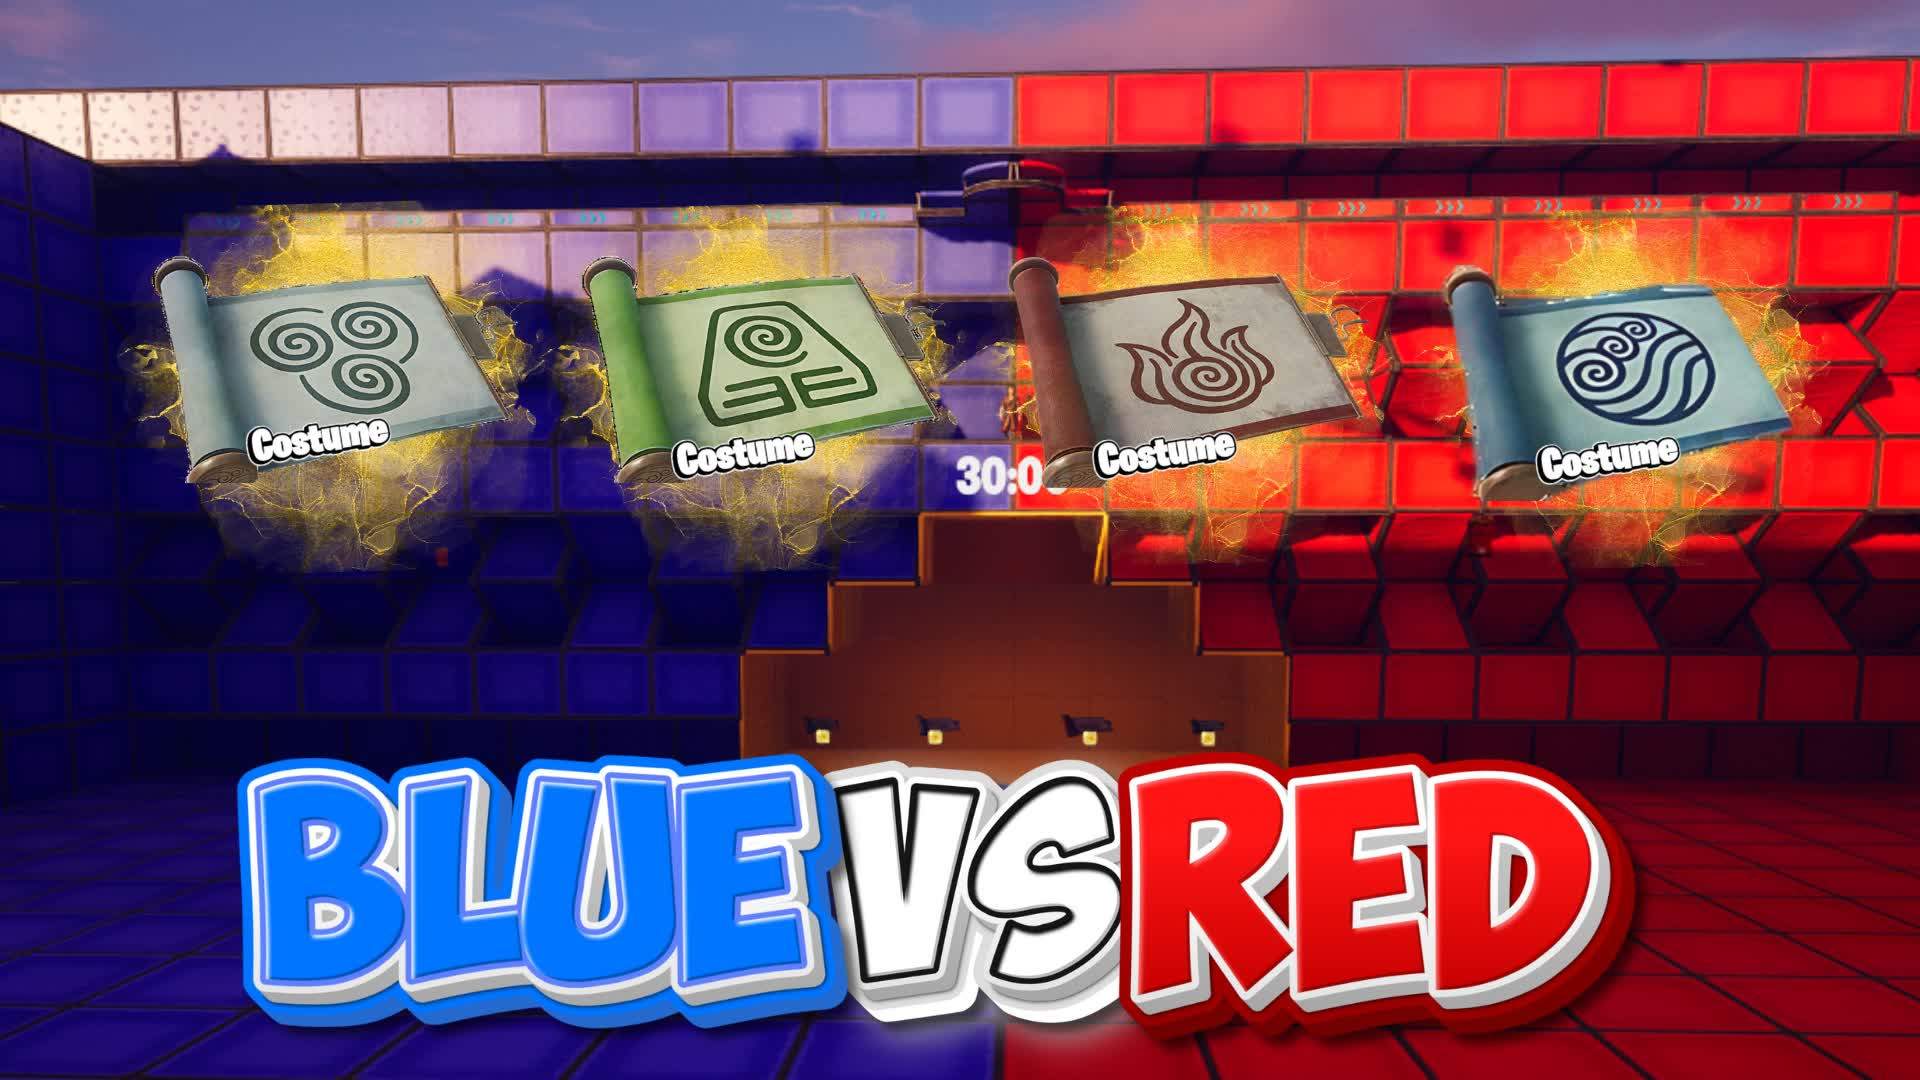 🔴AVATAR RED VS BLUE 🔵